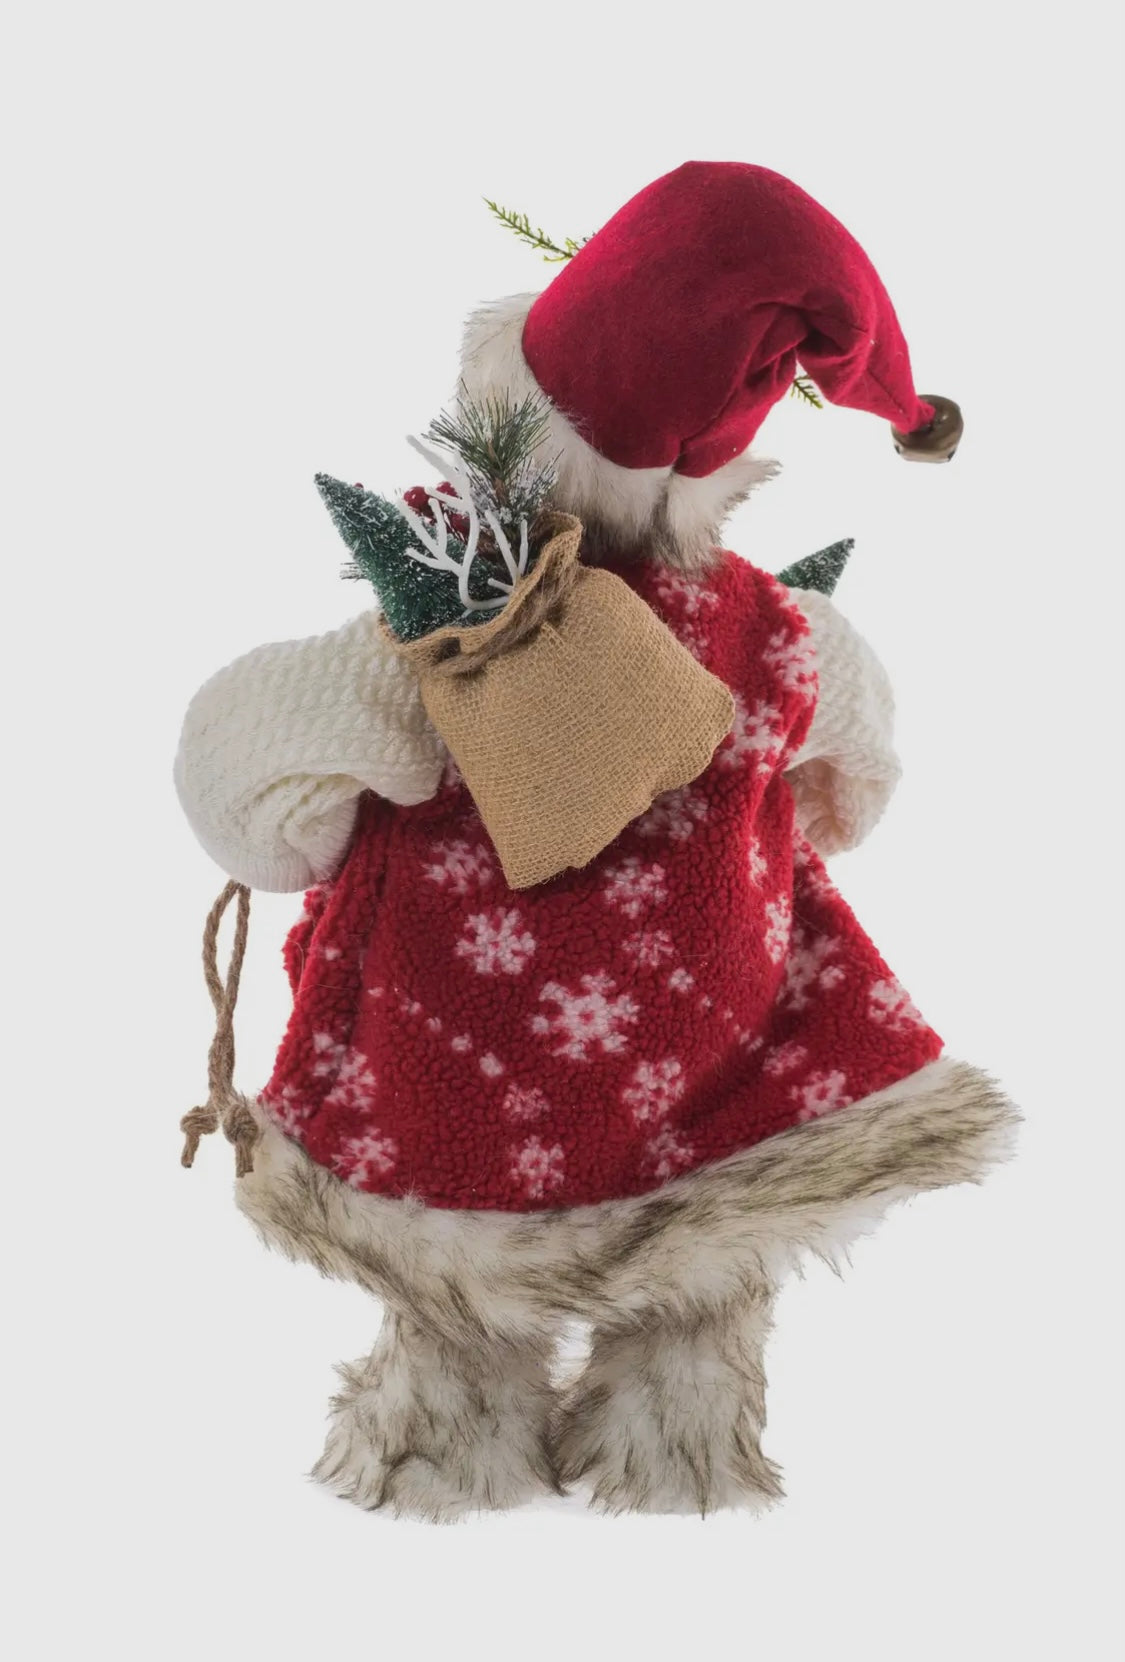 Cozy Knitted Jumper Santa w/Toy Truck